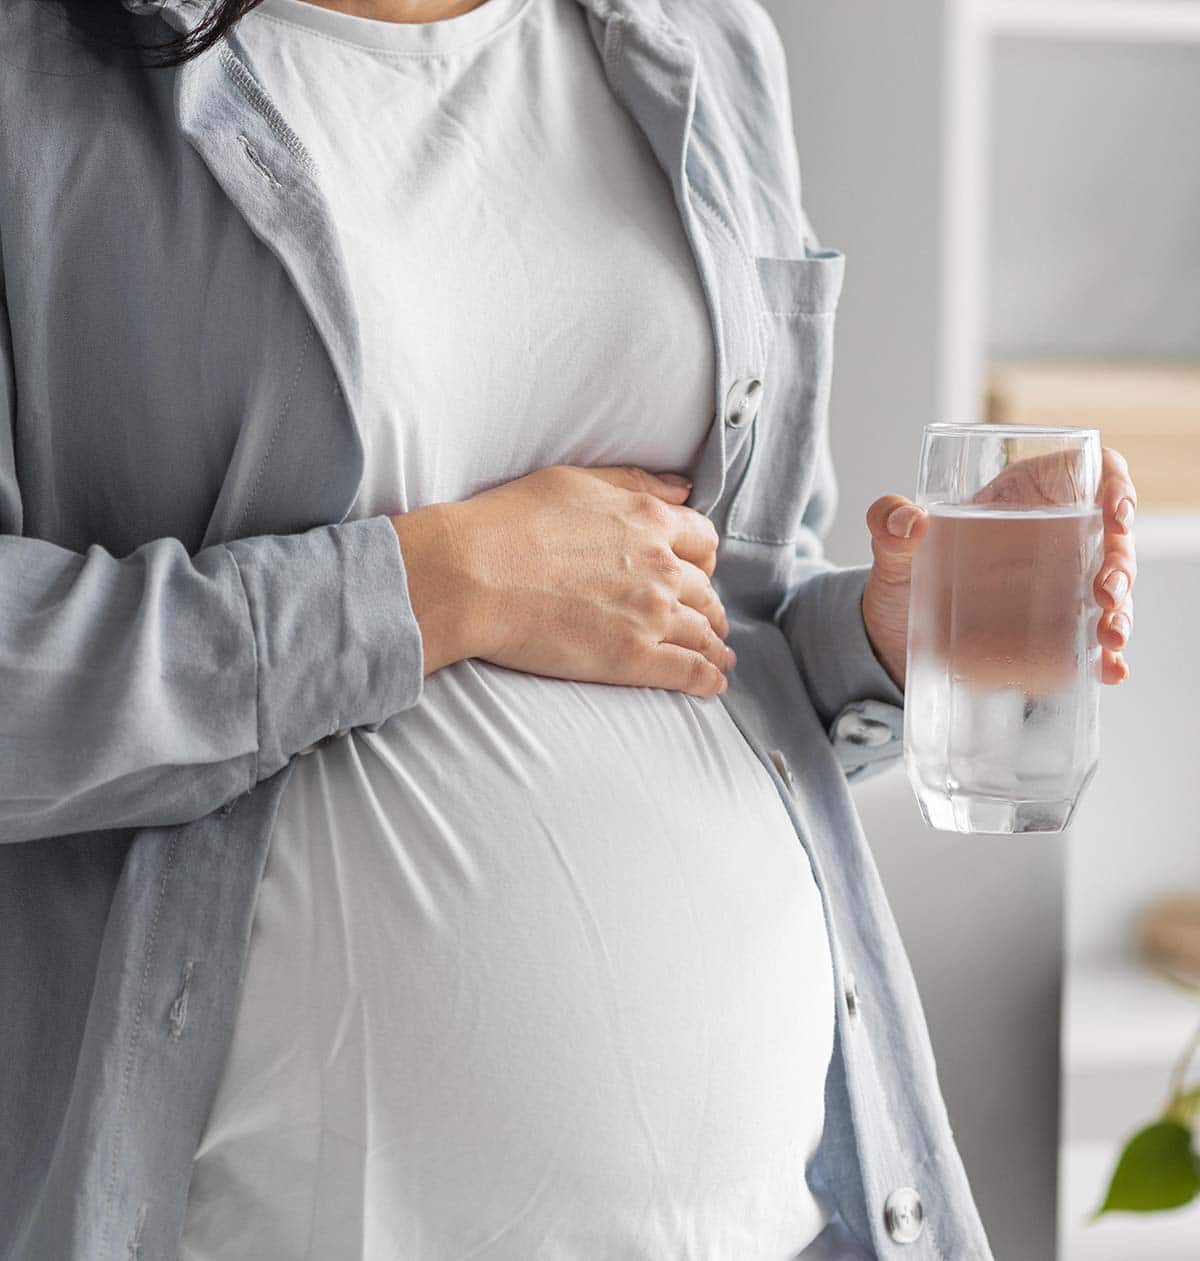 agua embarazo y lactancia